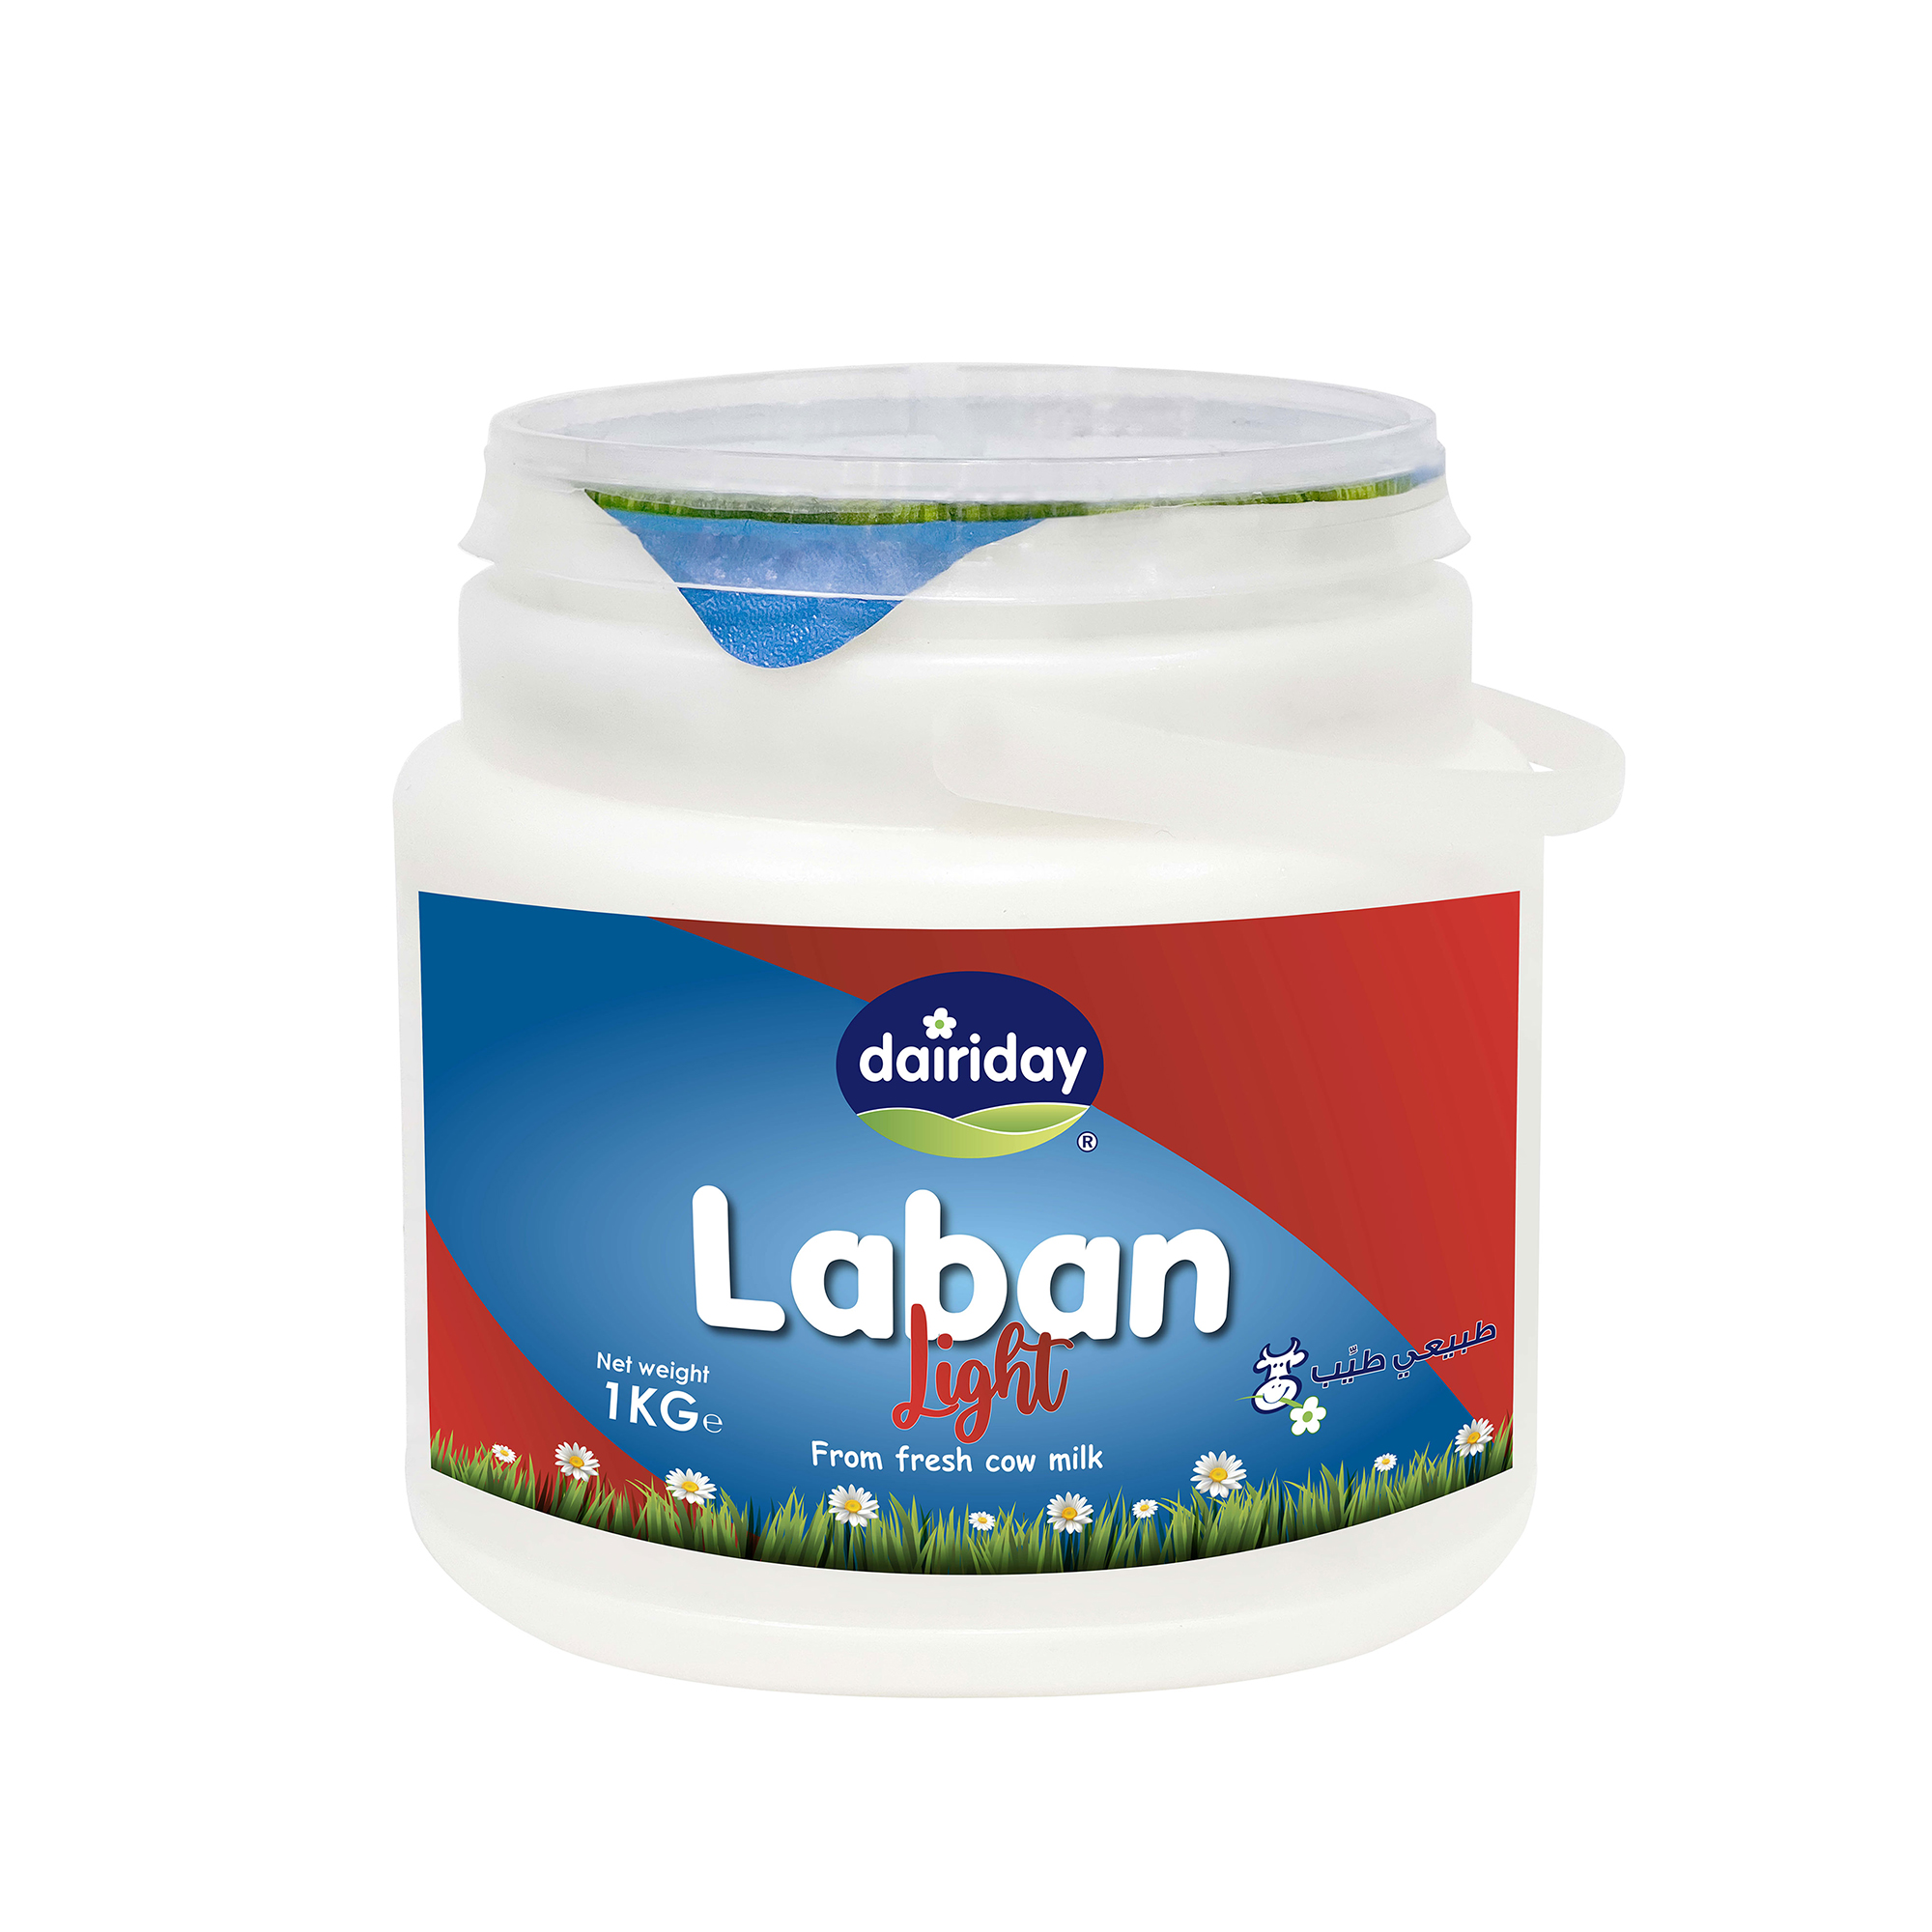 Dairiday-Laban-Light-1kg